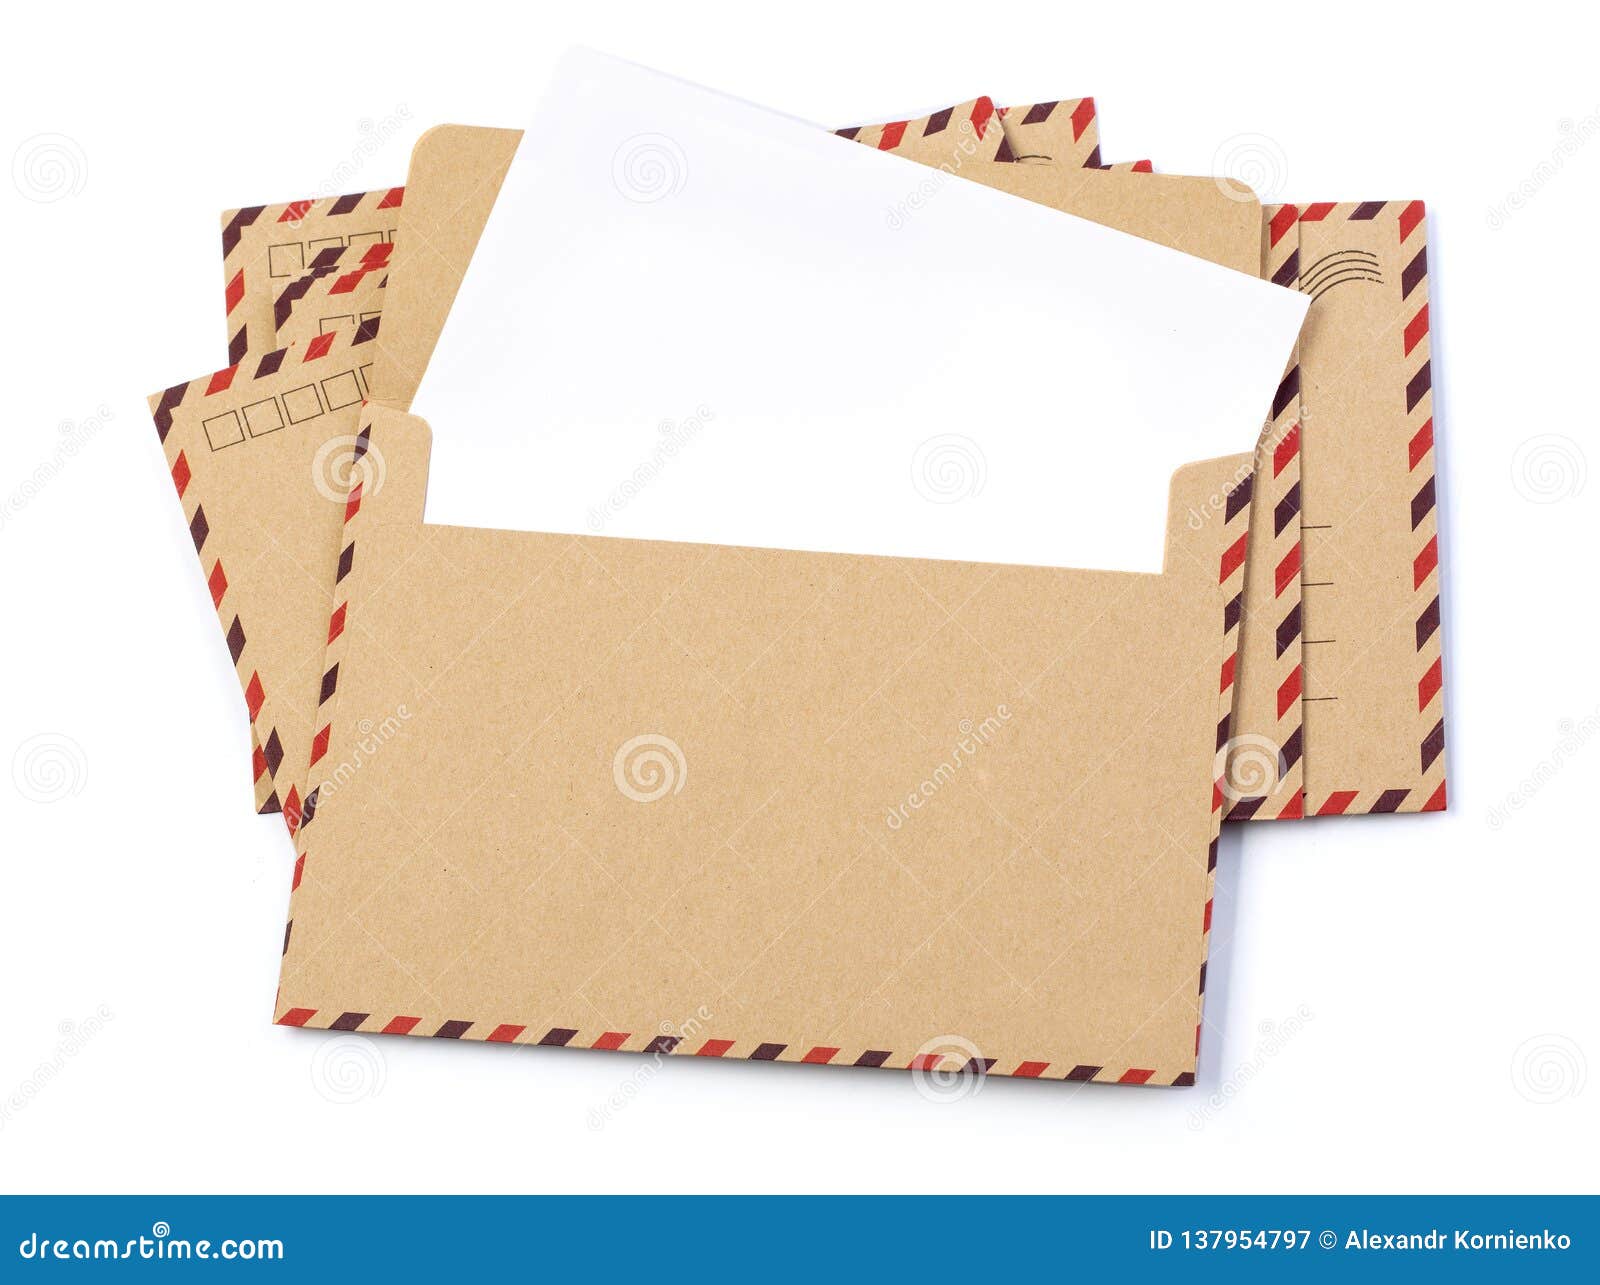 envelope brown-gray wood par avion